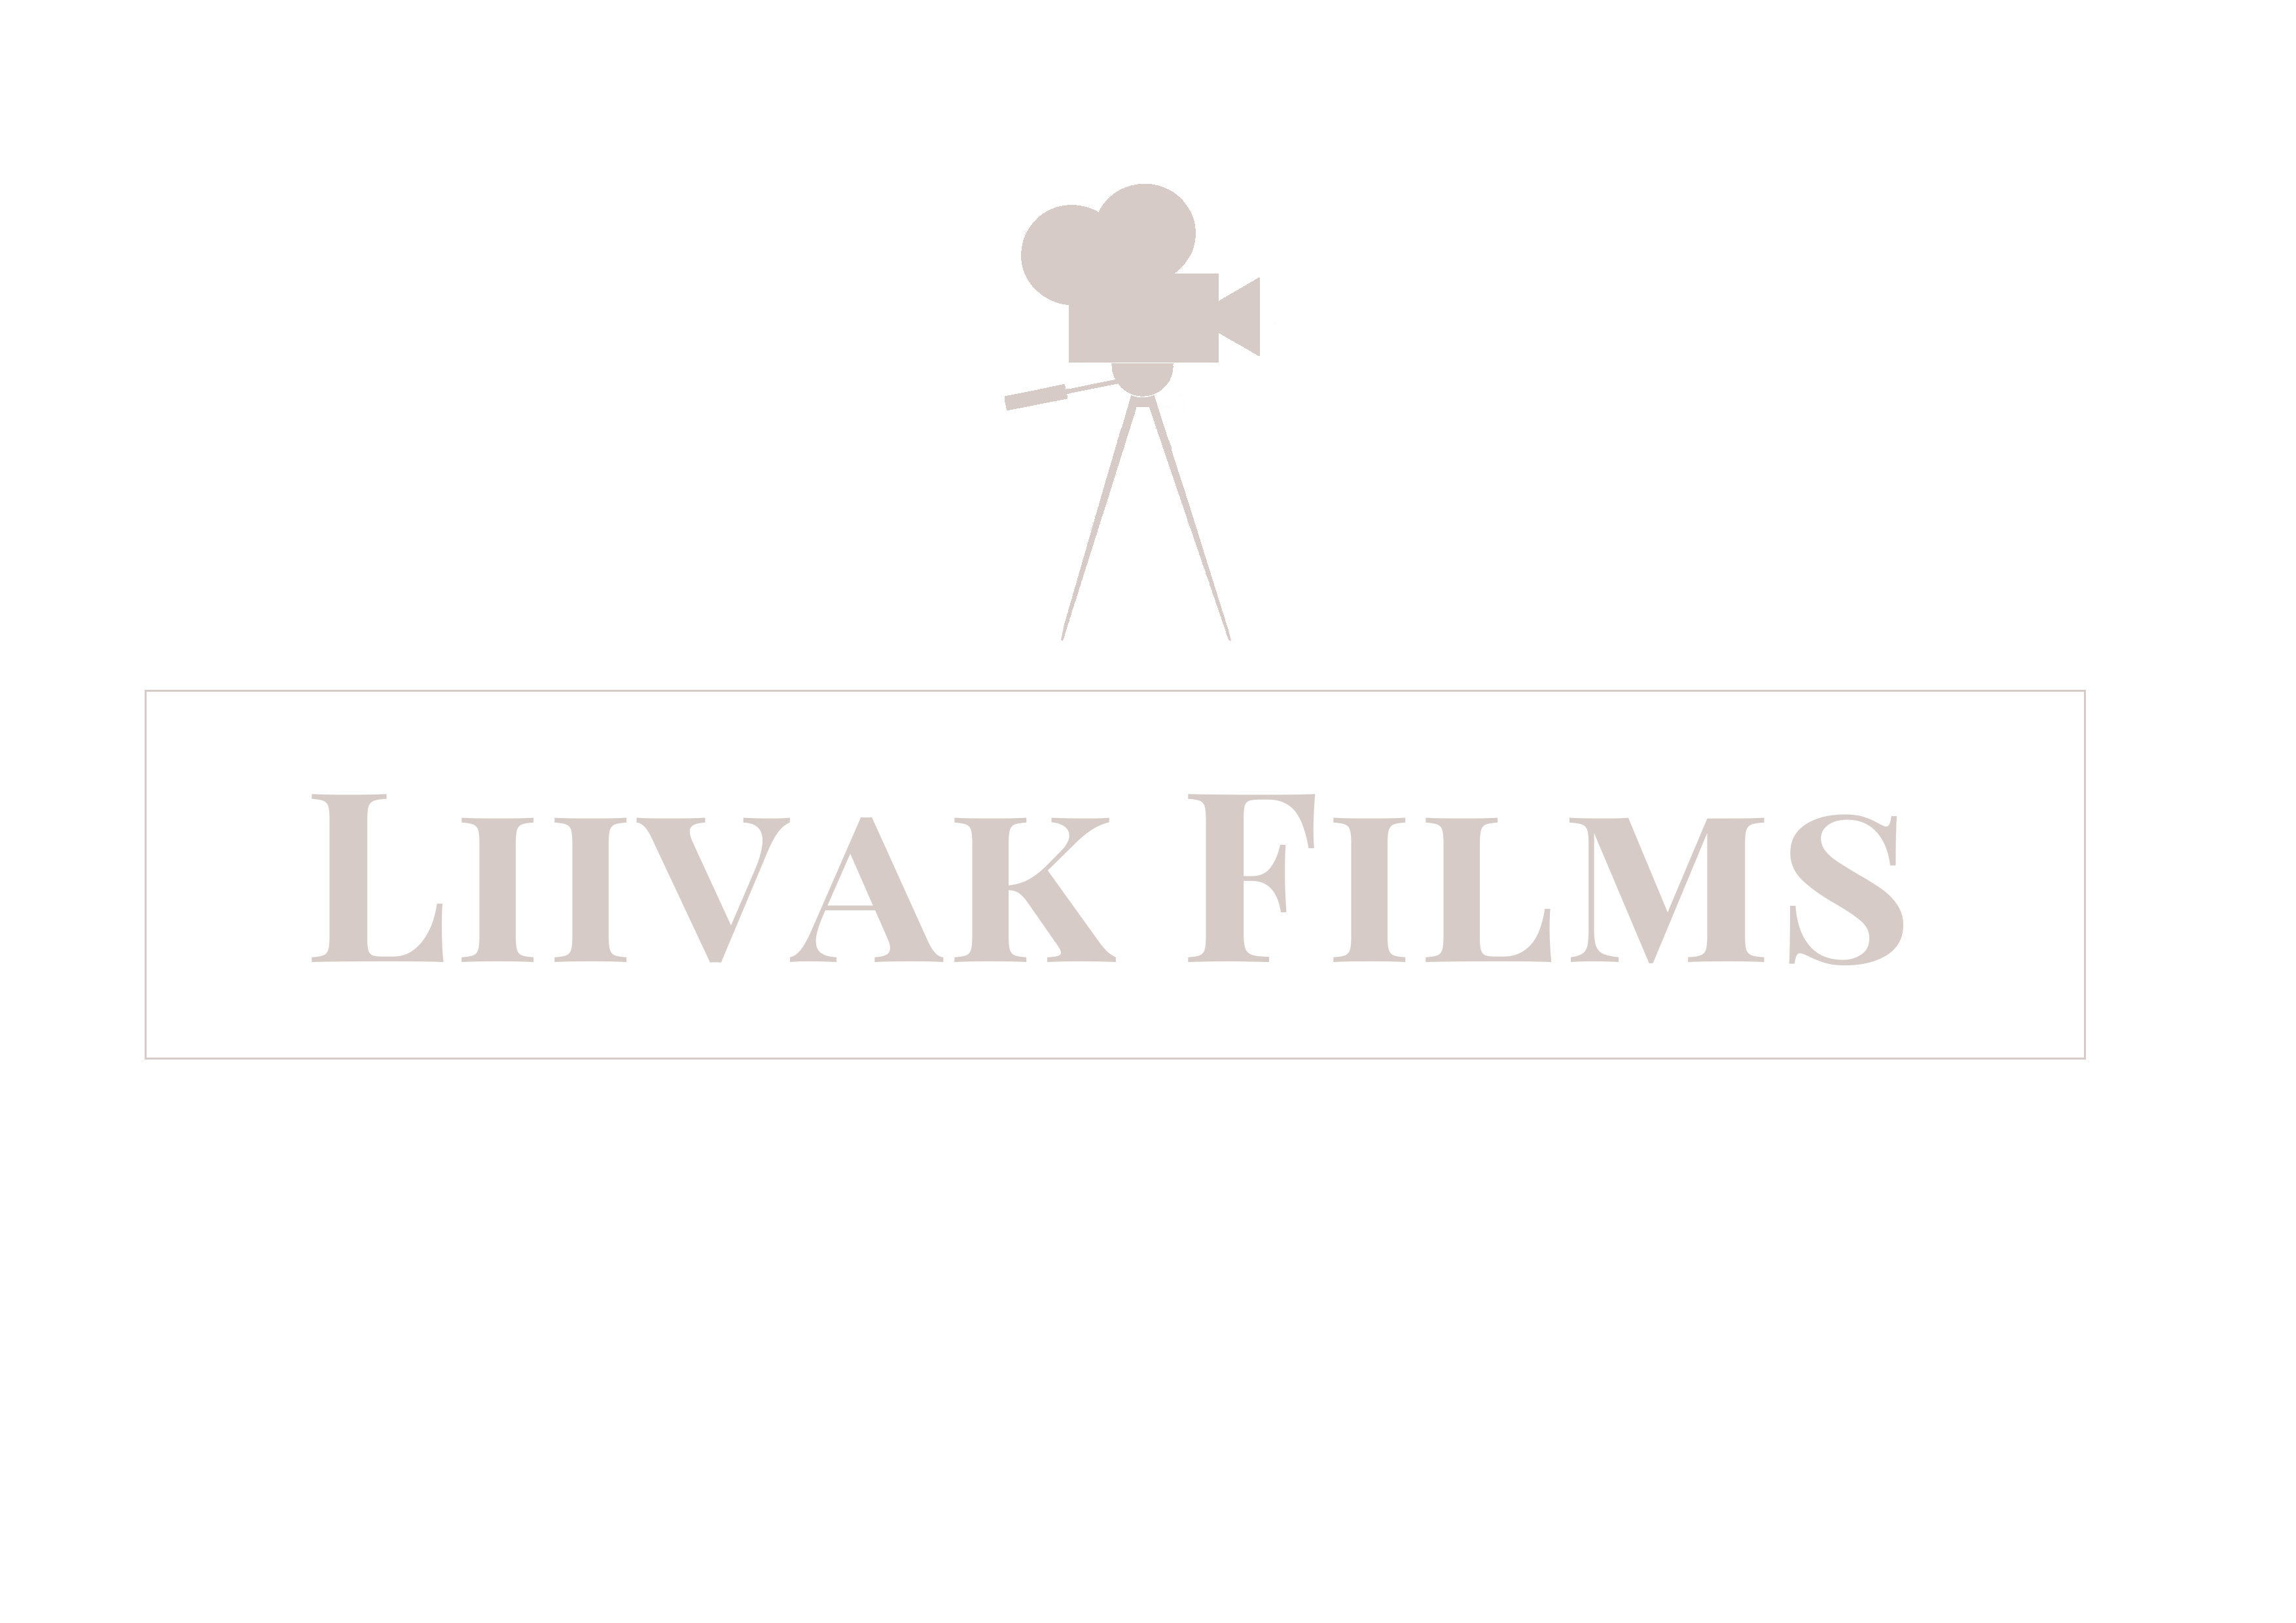 Liivak Films logo